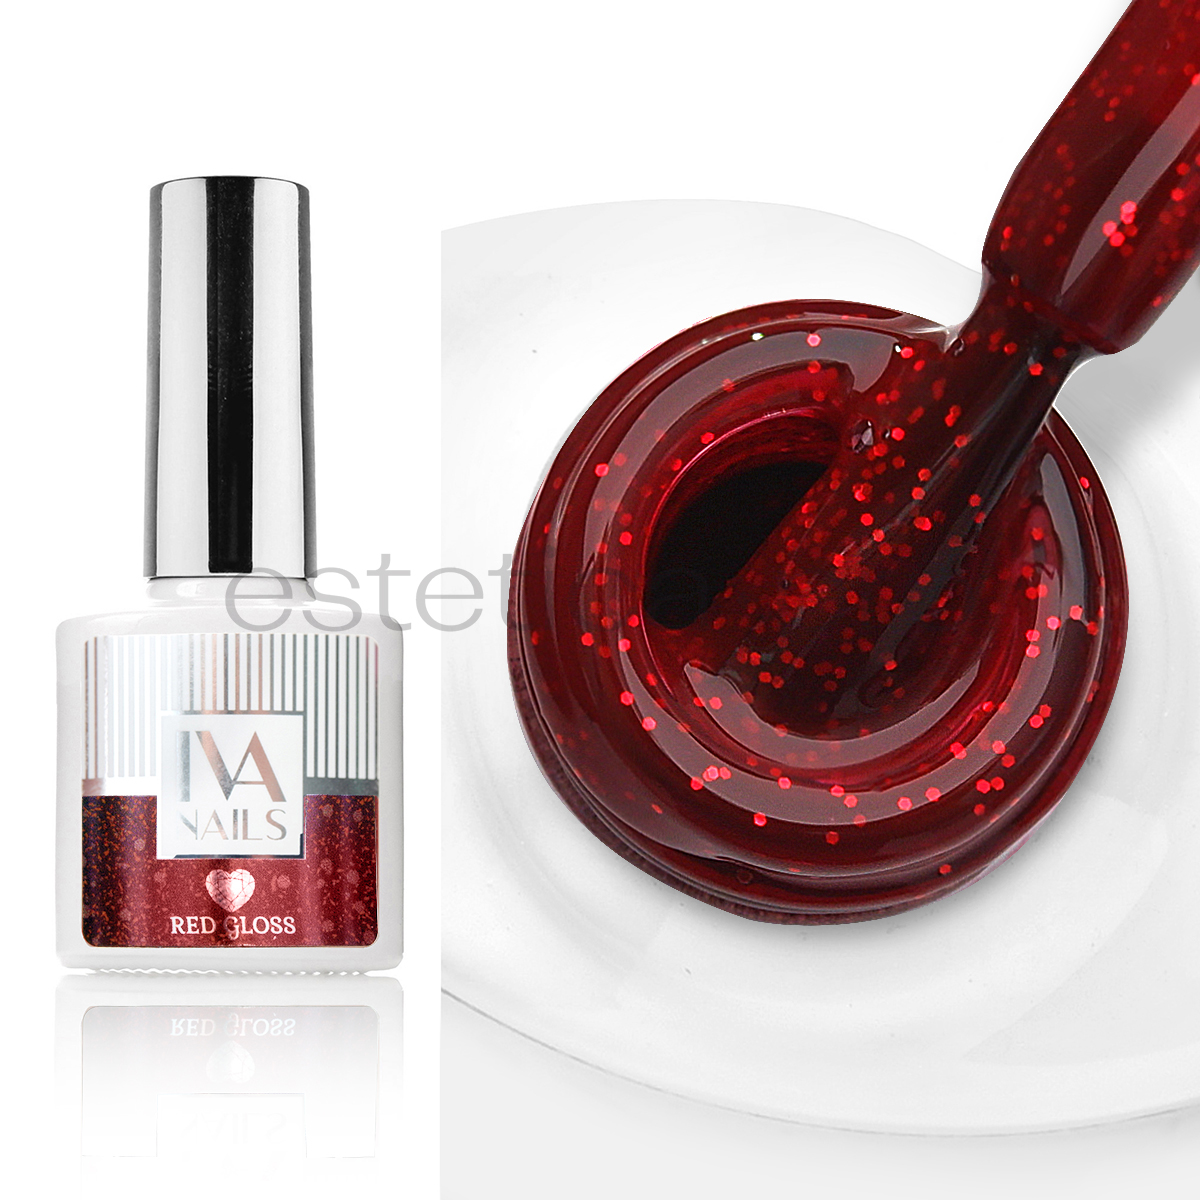 Гель-лак Iva Nails Red Gloss 02, 8 мл.